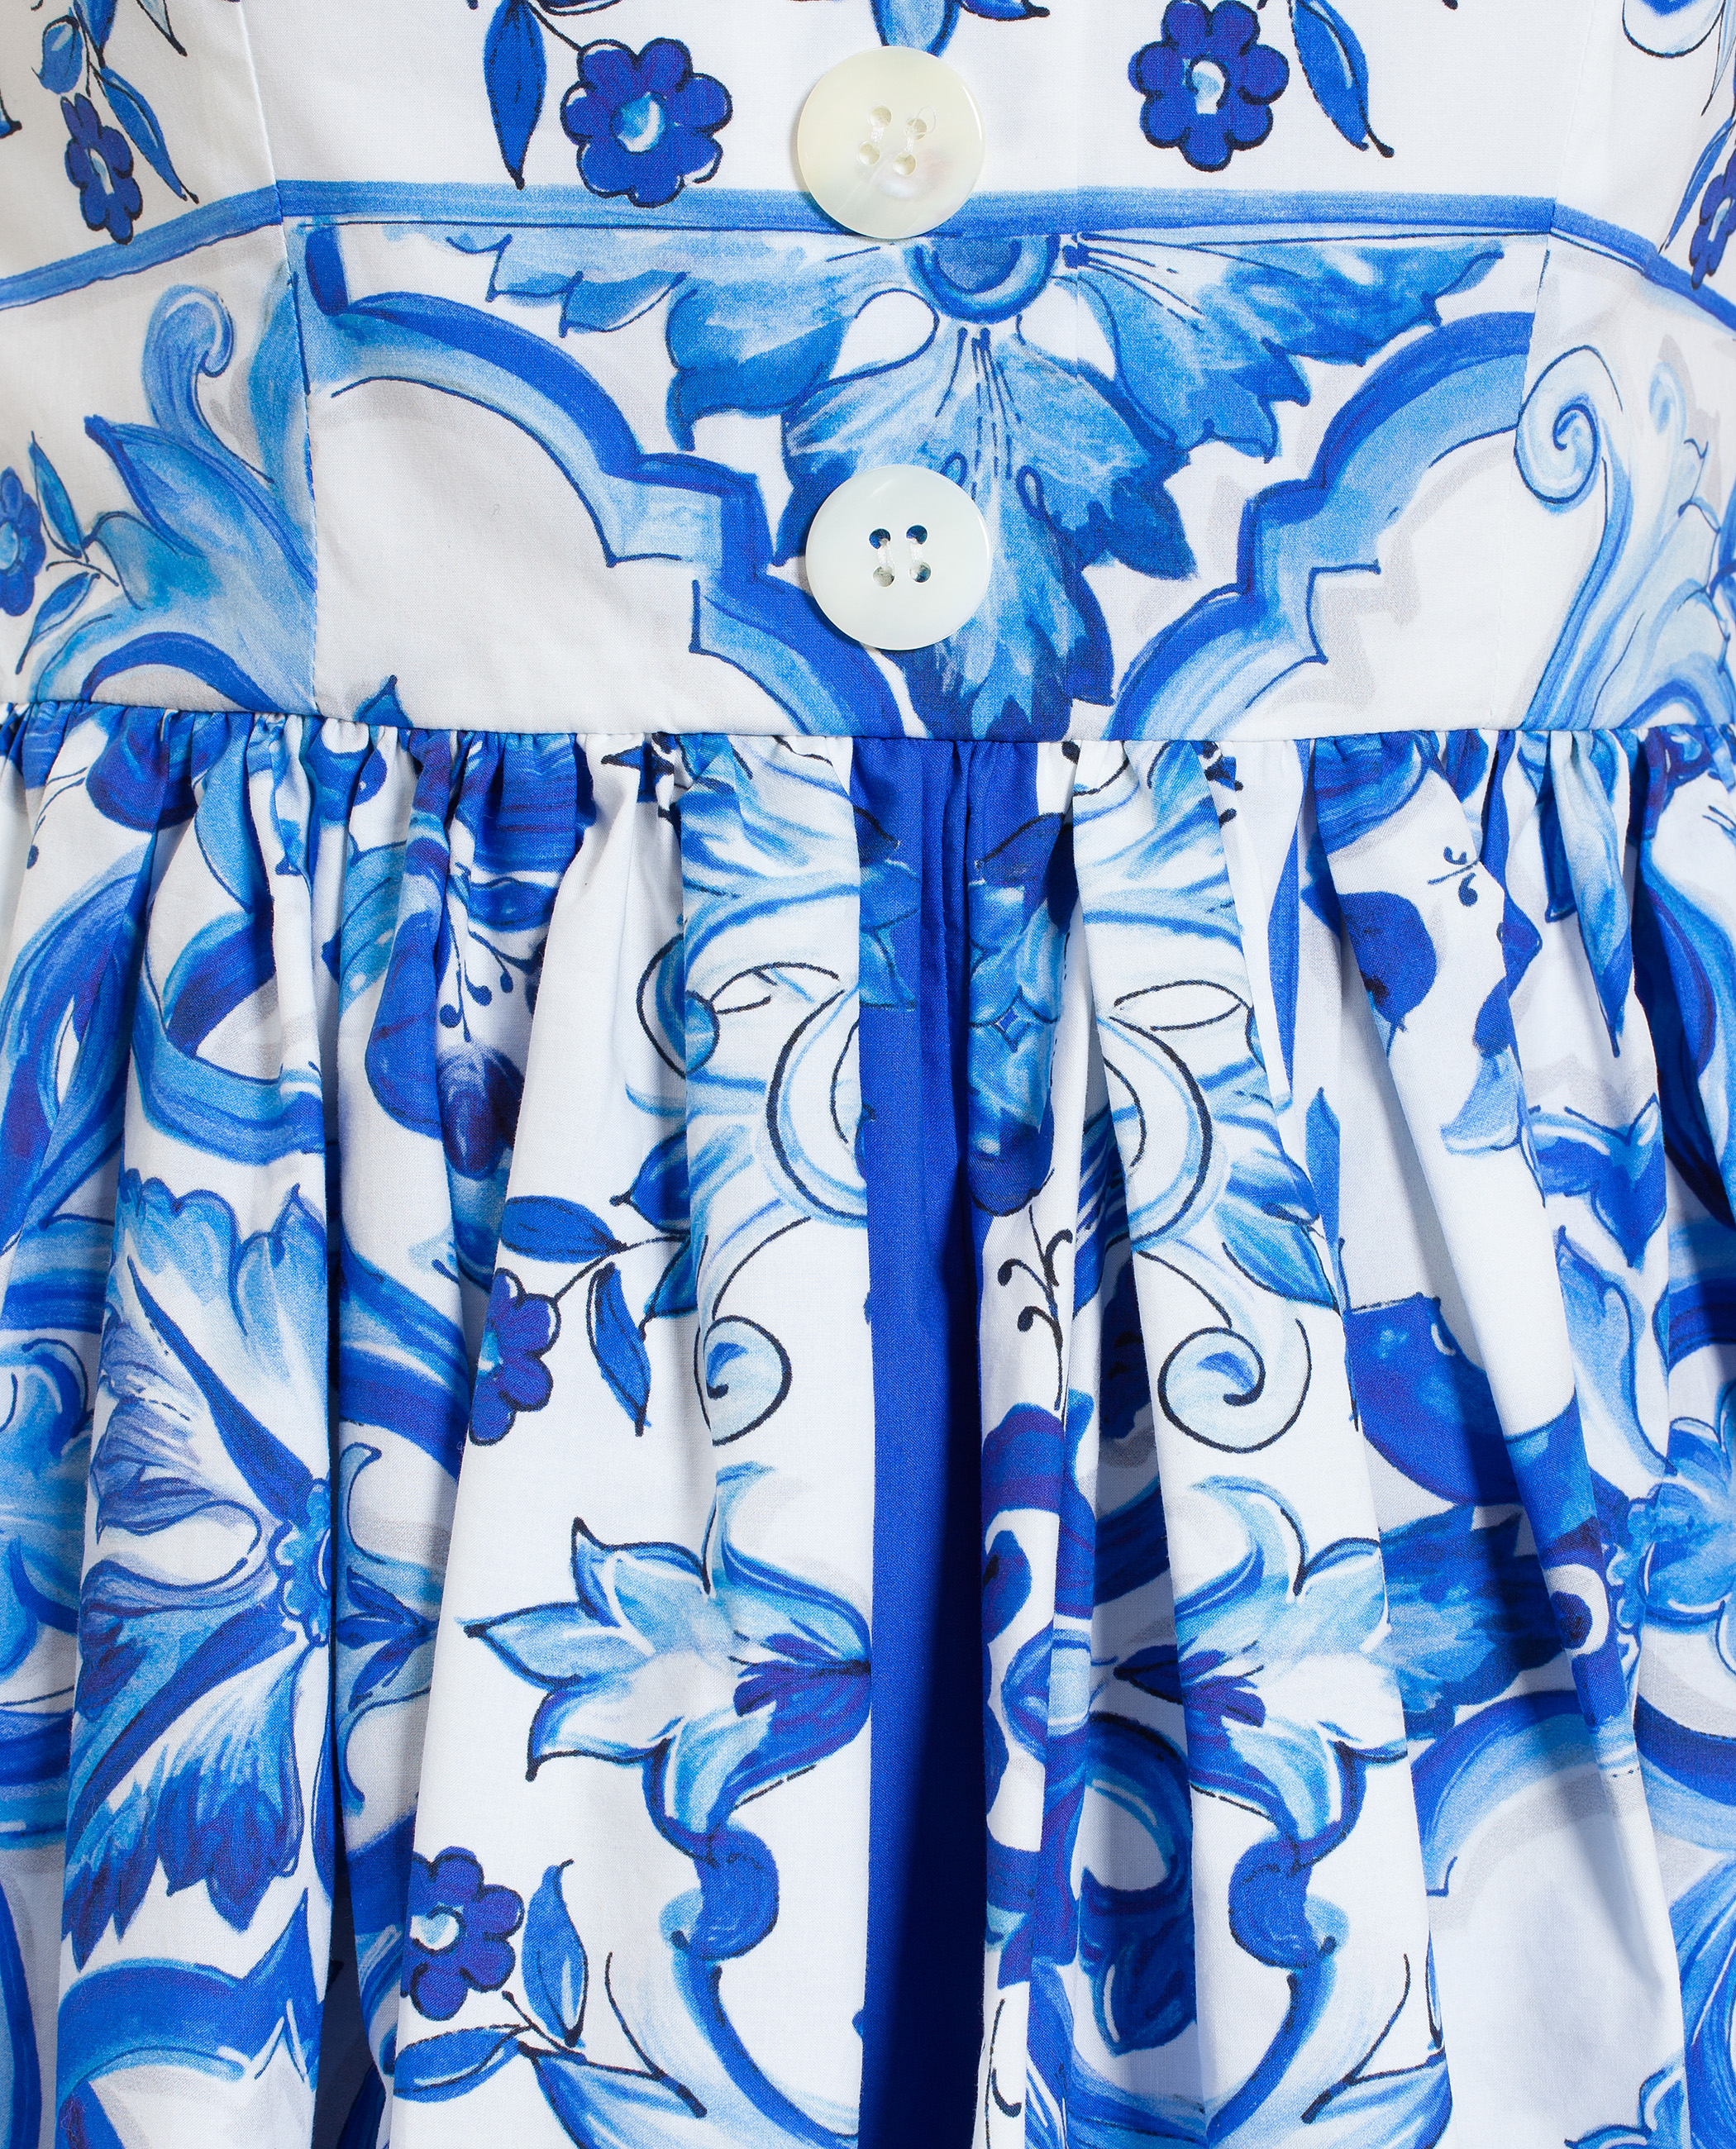 Dolce & gabbana 'Majolica' Dress in Blue | Lyst